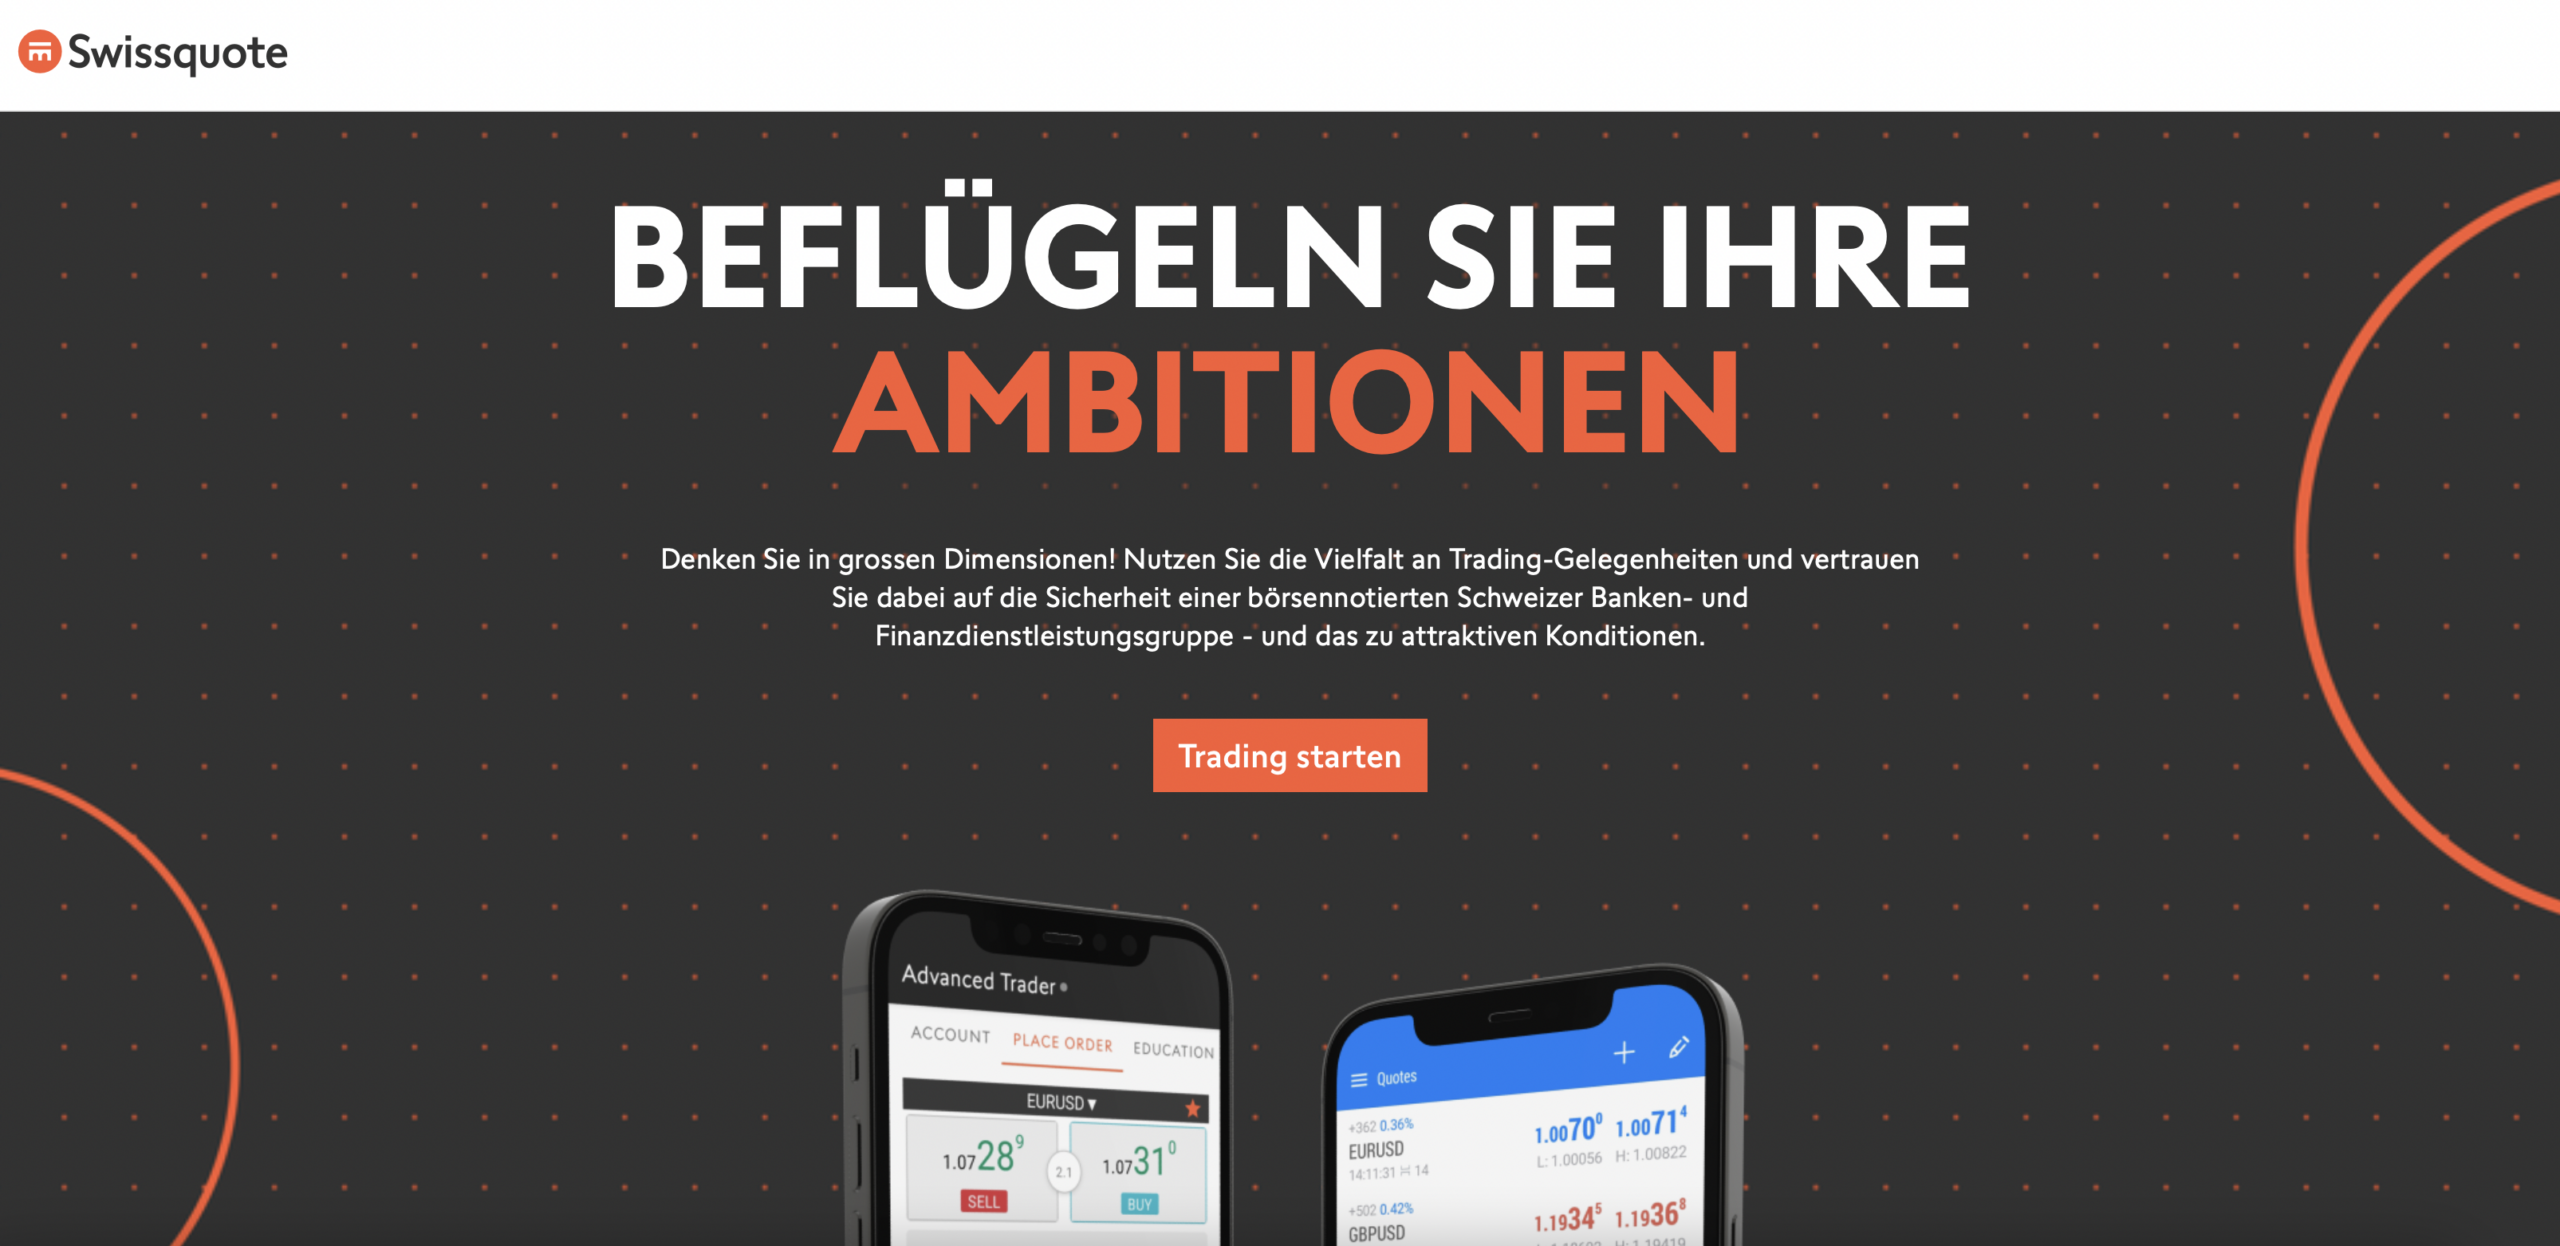 Swissquote Website